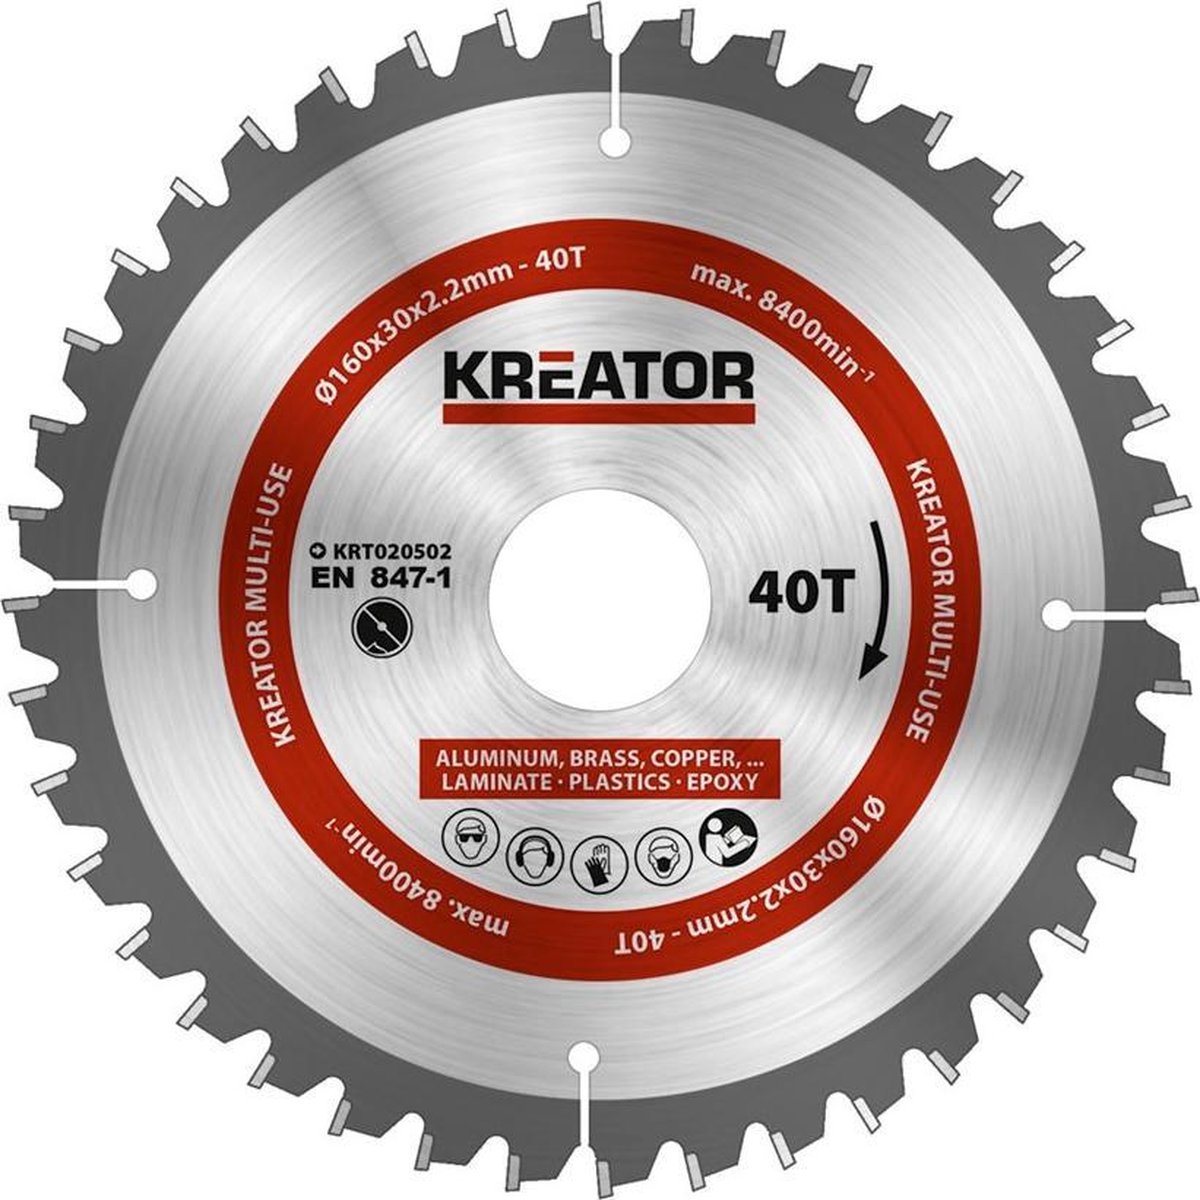 Kreator KRT020502 Universeel zaagblad 160 mm - 40T